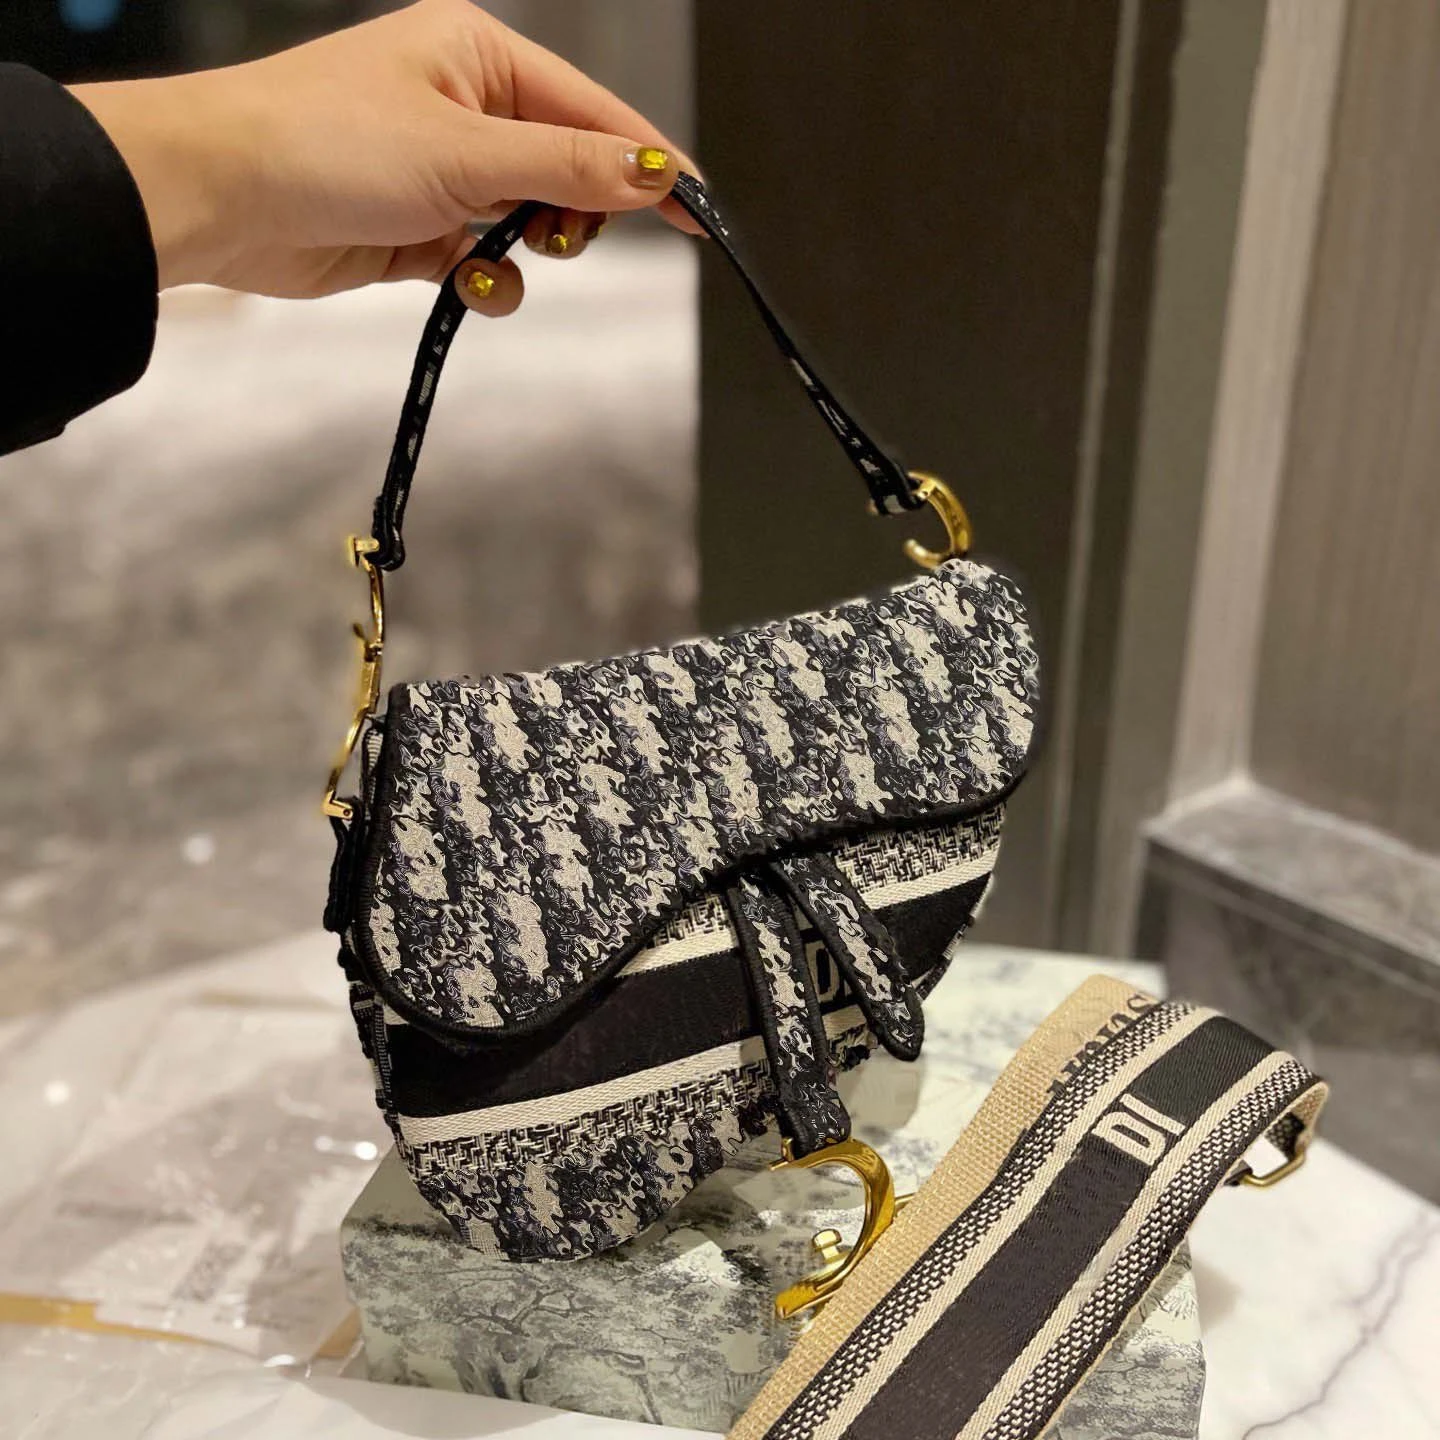 

2022 Elegant Mini Shoulder Underarm Bags Fold Design Small Handbags Ladies Women Hand Bag, Picture shows